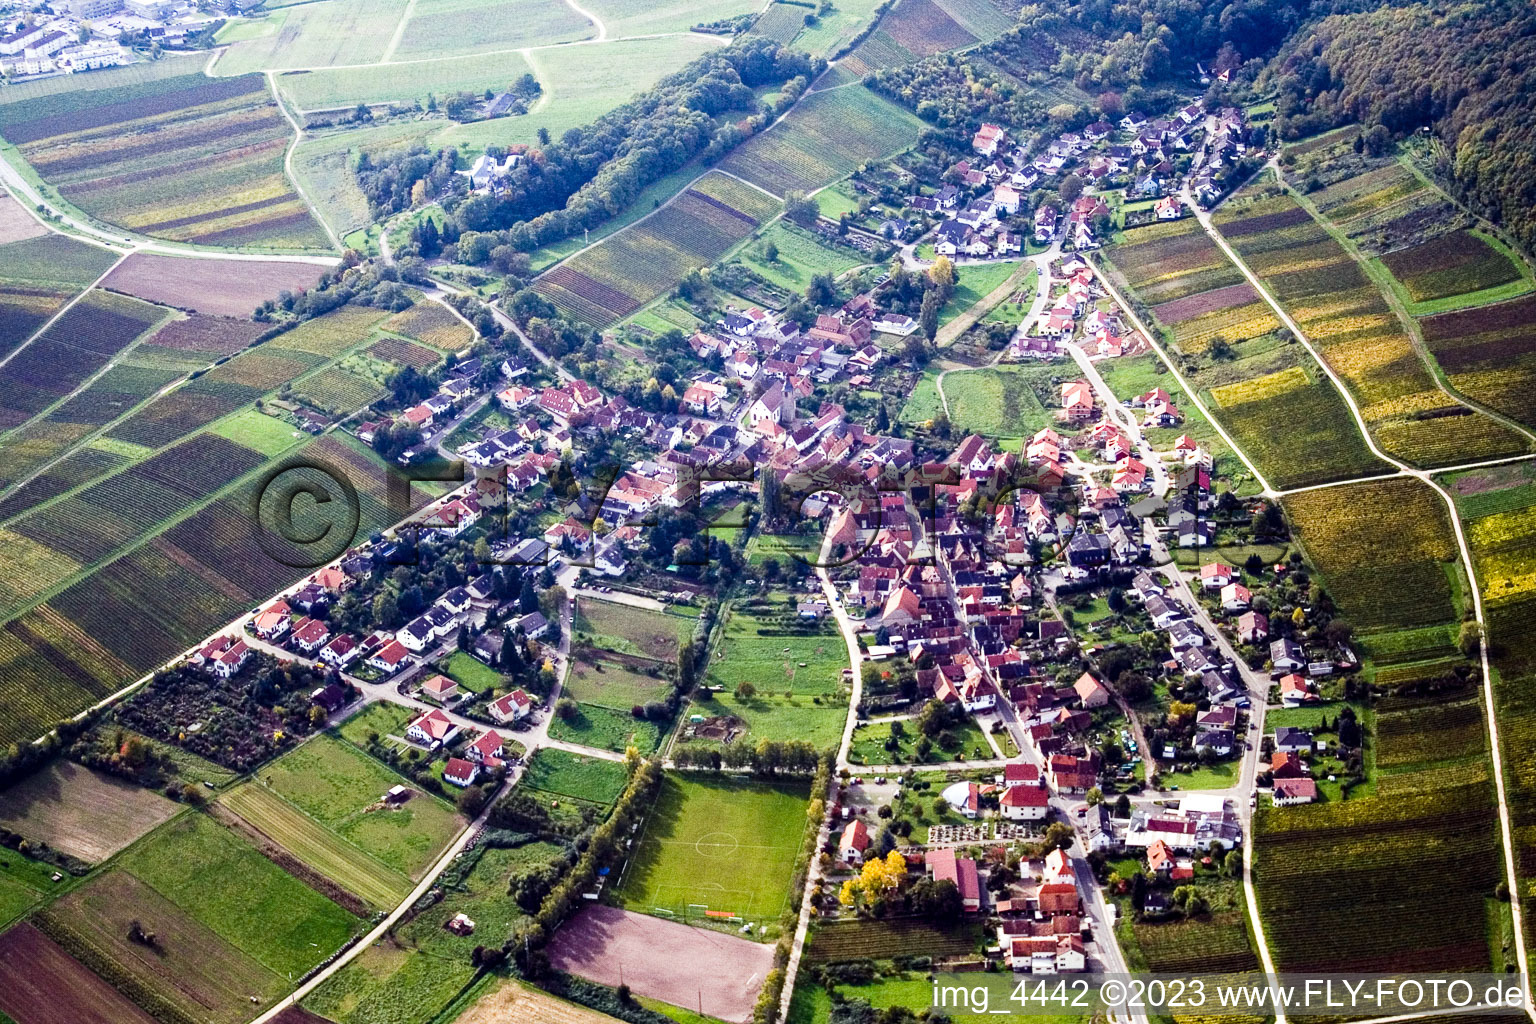 Pleisweiler-Oberhofen from the northwest in the district Gleishorbach in Gleiszellen-Gleishorbach in the state Rhineland-Palatinate, Germany